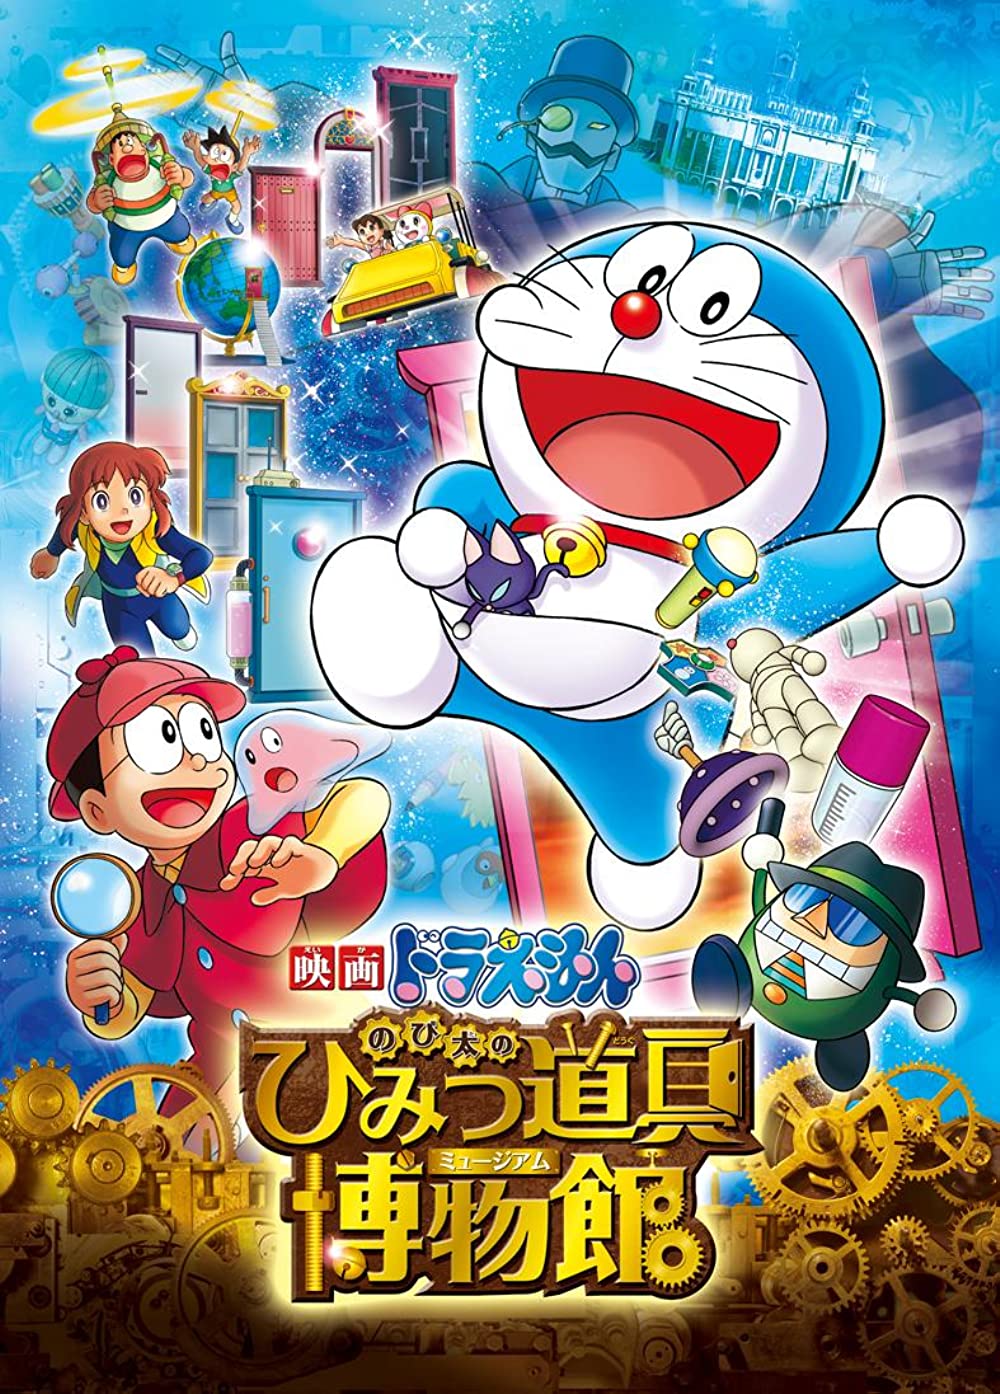 Doraemon: Nobita Và Viện Bảo Tàng Bảo Bối – Doraemon The Movie: Nobita’s Secret Gadget Museum (2013) Full HD Vietsub